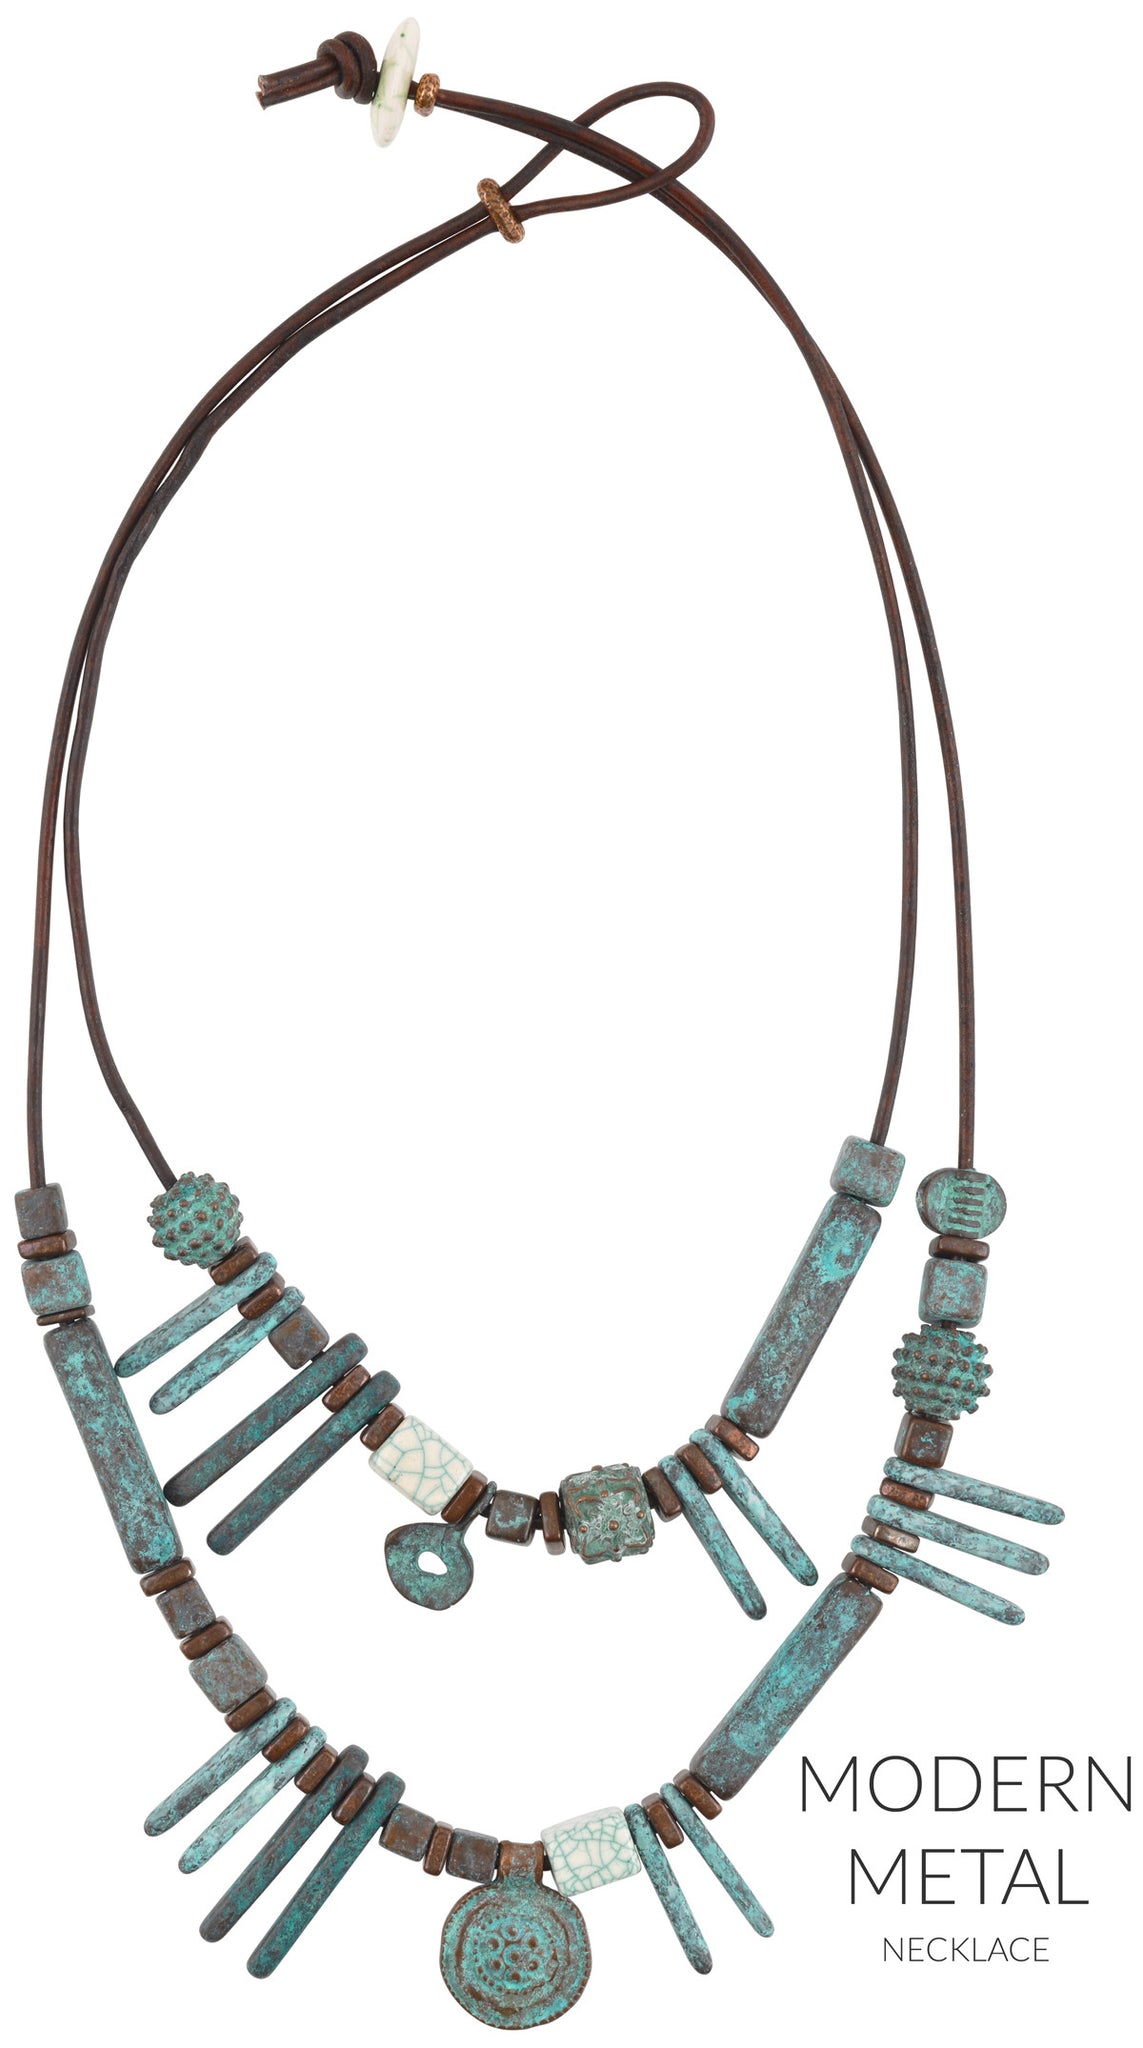 Modern Metal Leather Necklace Blog Tamara Scott Designs